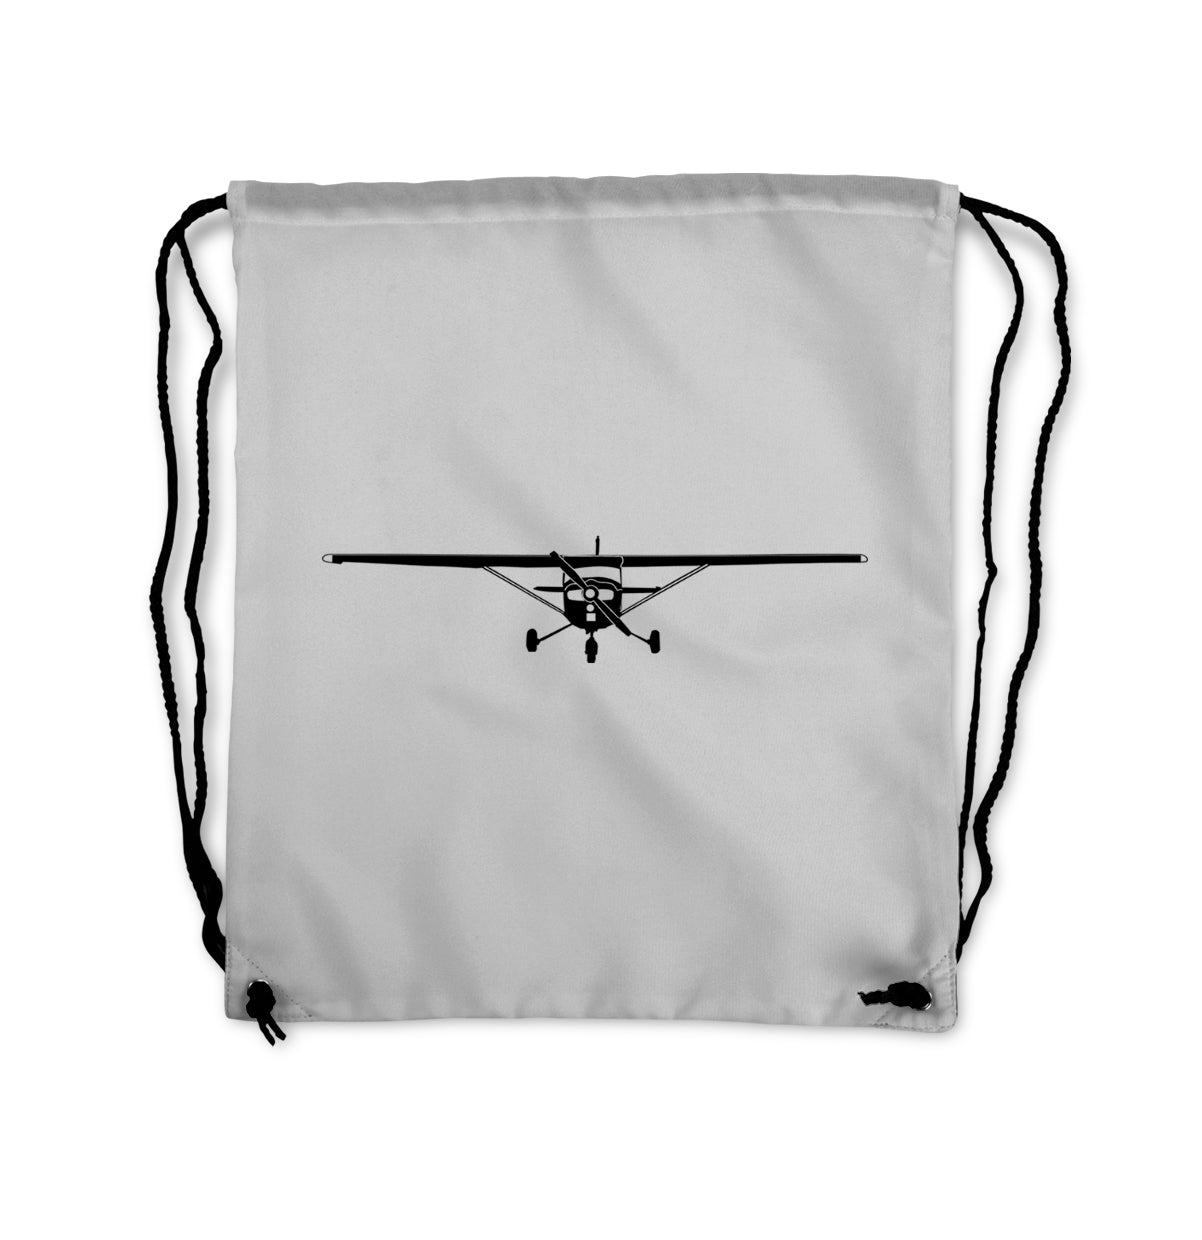 Cessna 172 Silhouette Designed Drawstring Bags